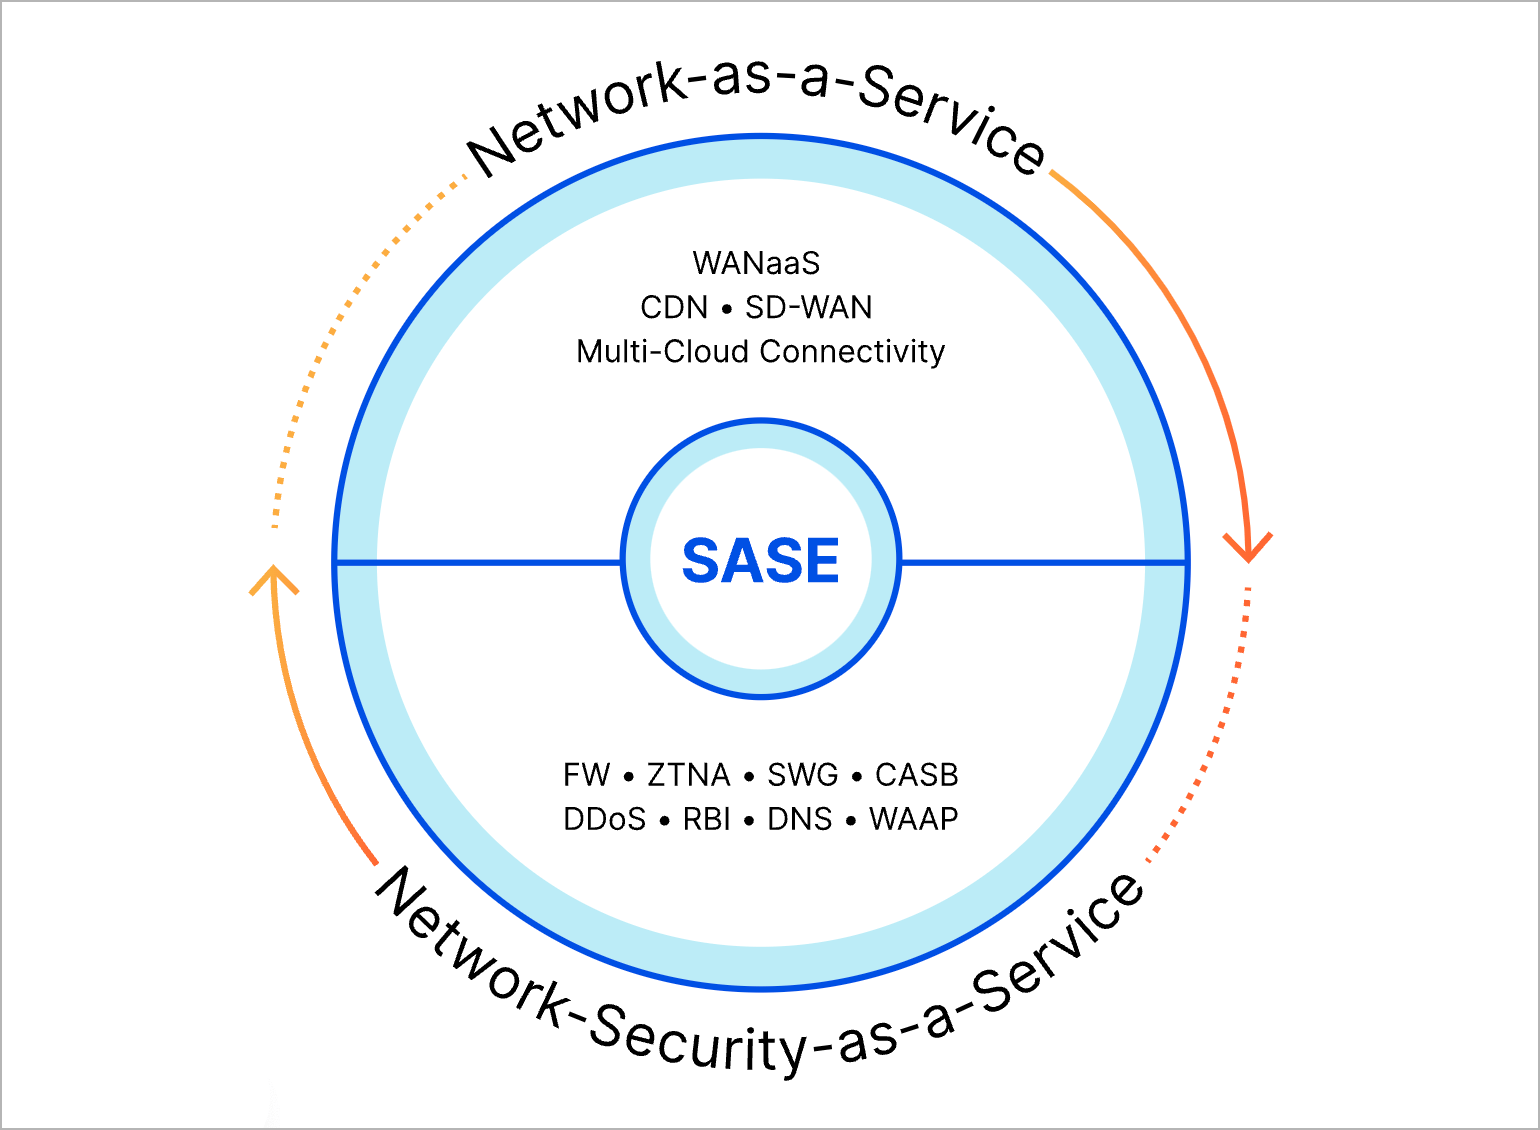 Secure Access Service Edge (SASE)